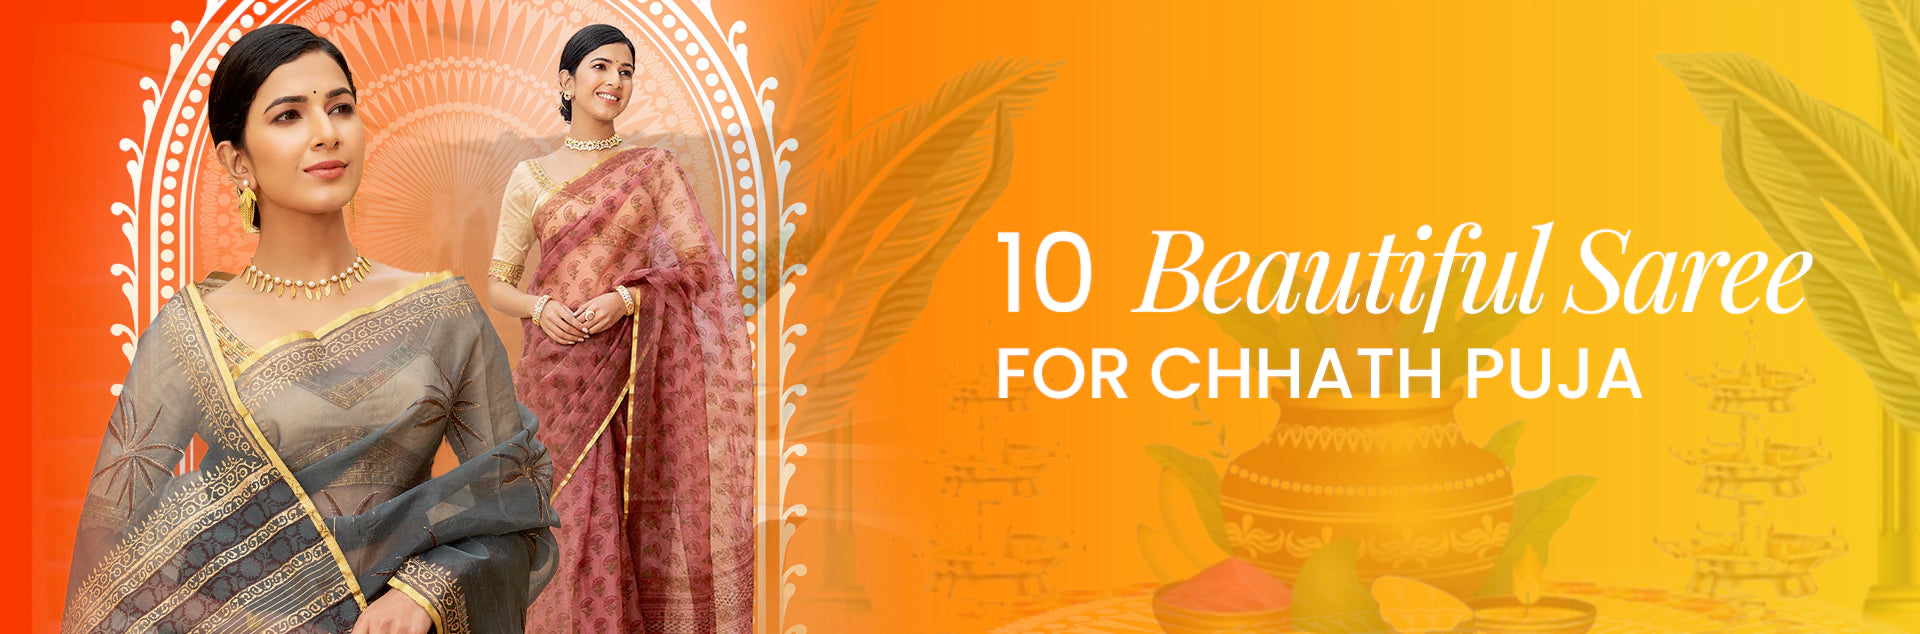 10 Beautiful Saree for Chhath Puja